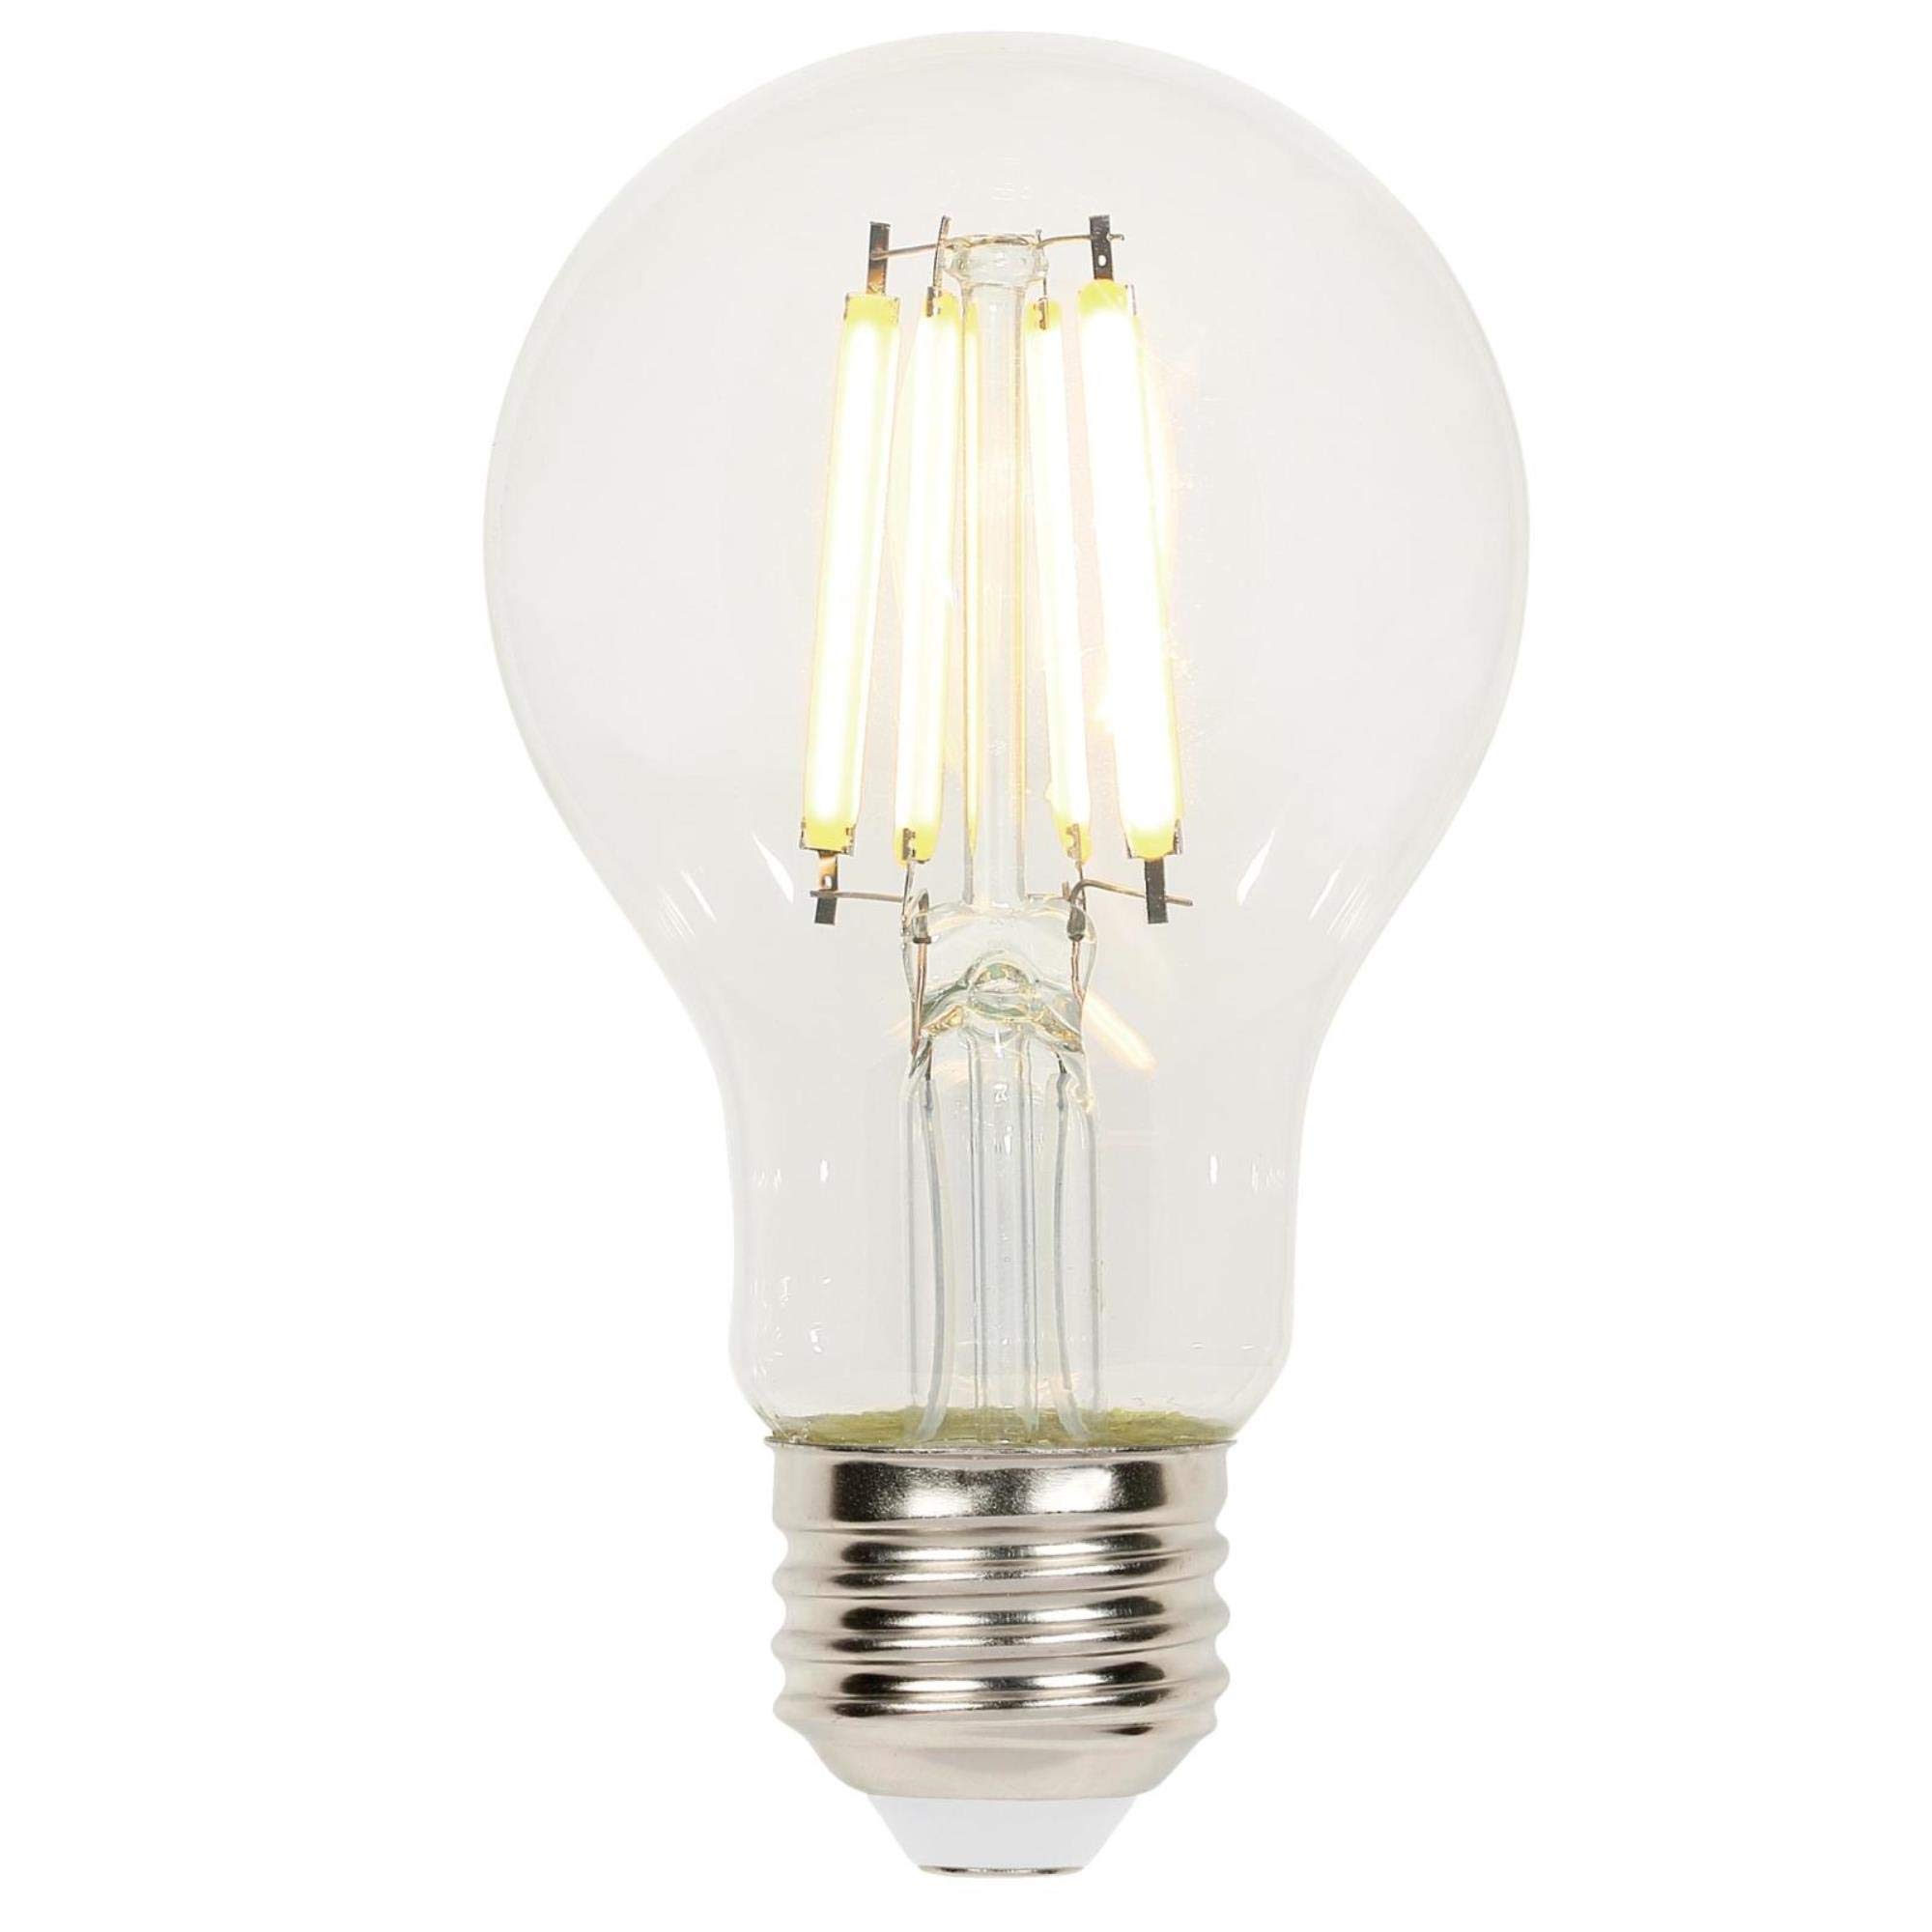 Westinghouse Lighting 5316500 65 Watt (60 Watt Equivalent) A19 Dimmable Clear Filament Led Light Bulb, Medium Base, Single